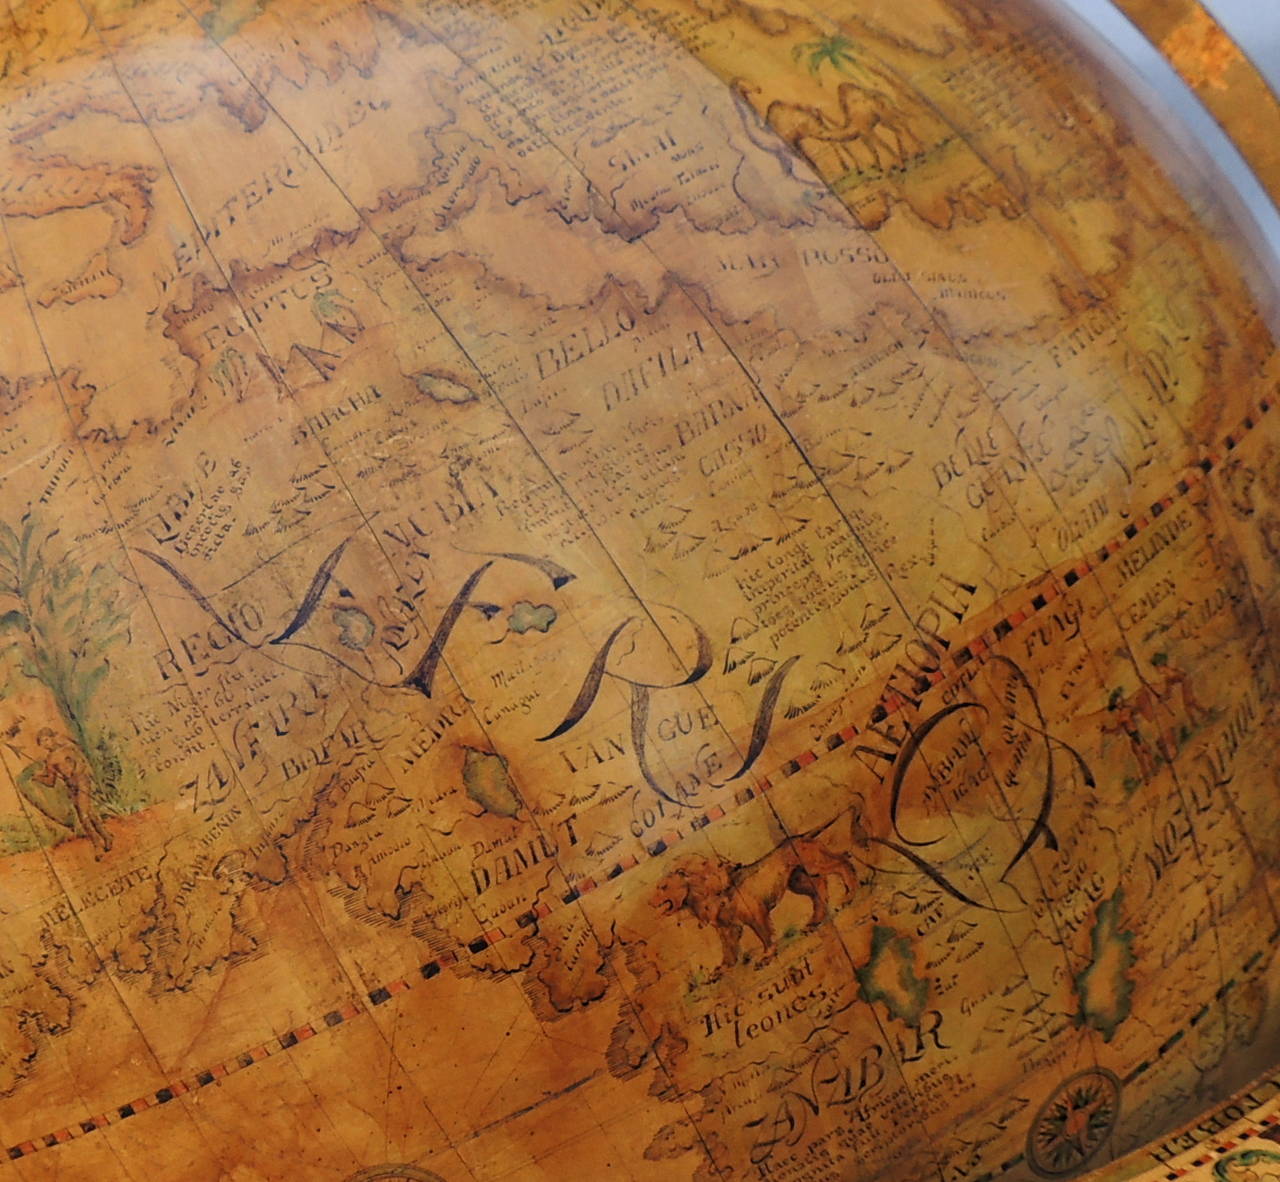 antique world globes